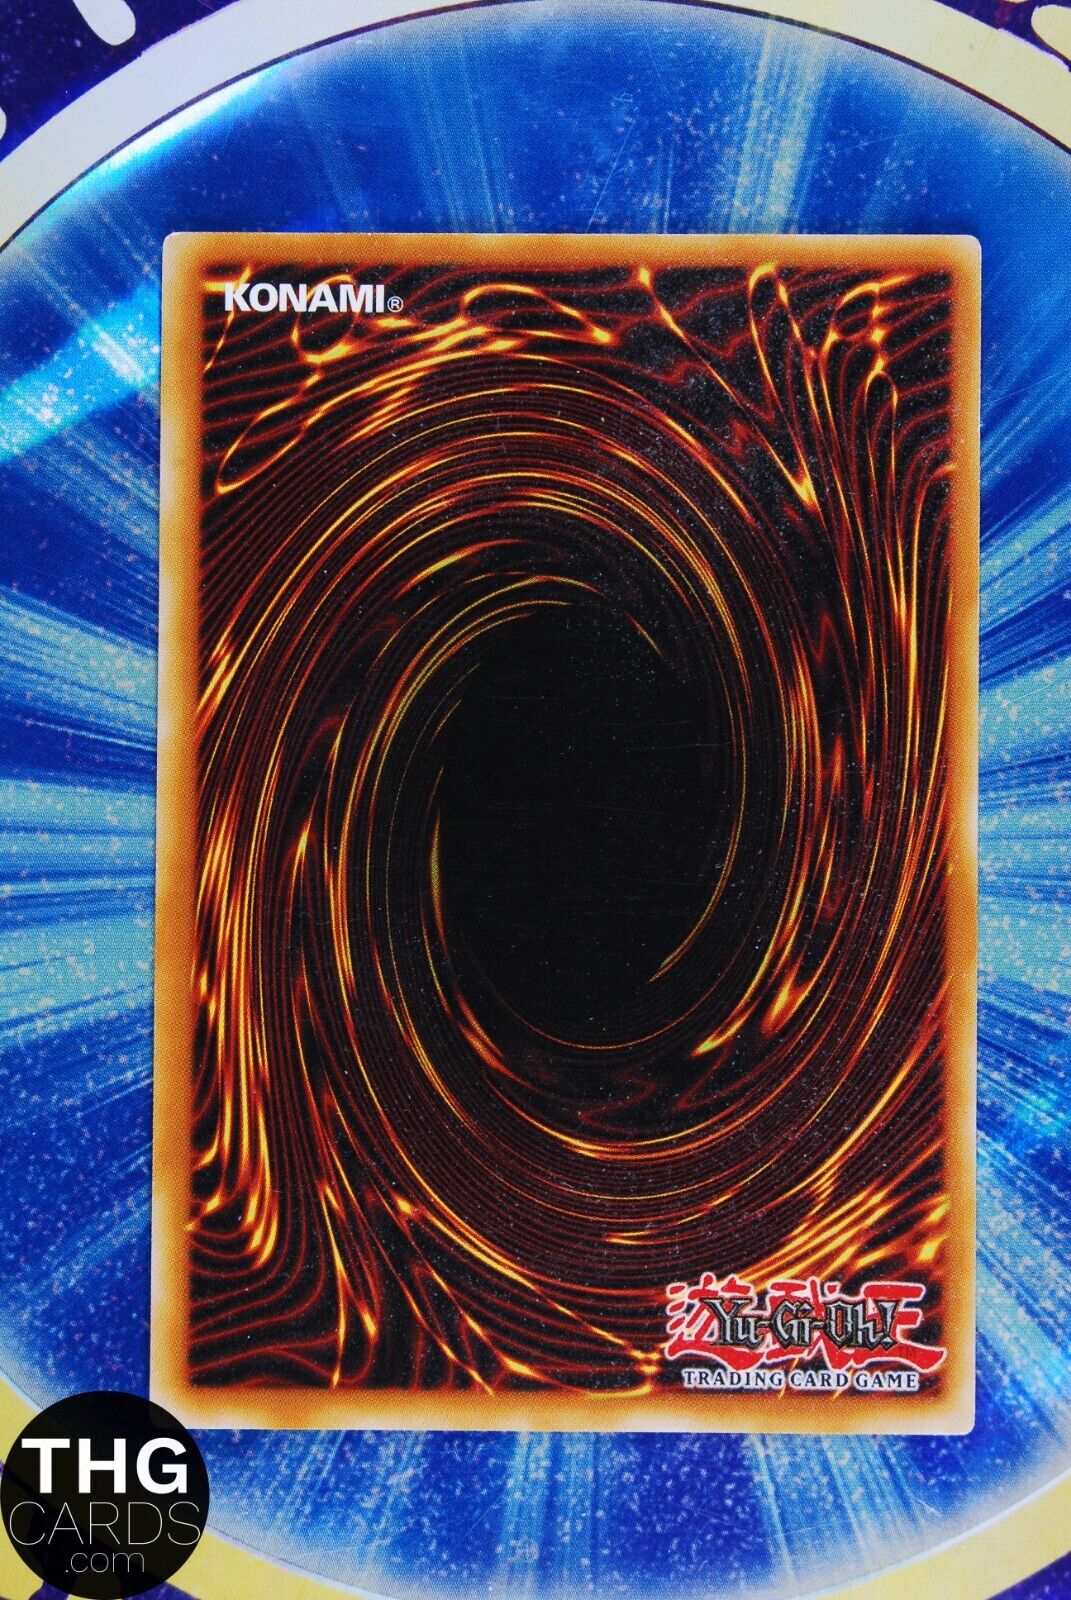 Yosenju Kama I THSF-EN003 1st Edition Secret Rare Yugioh Card